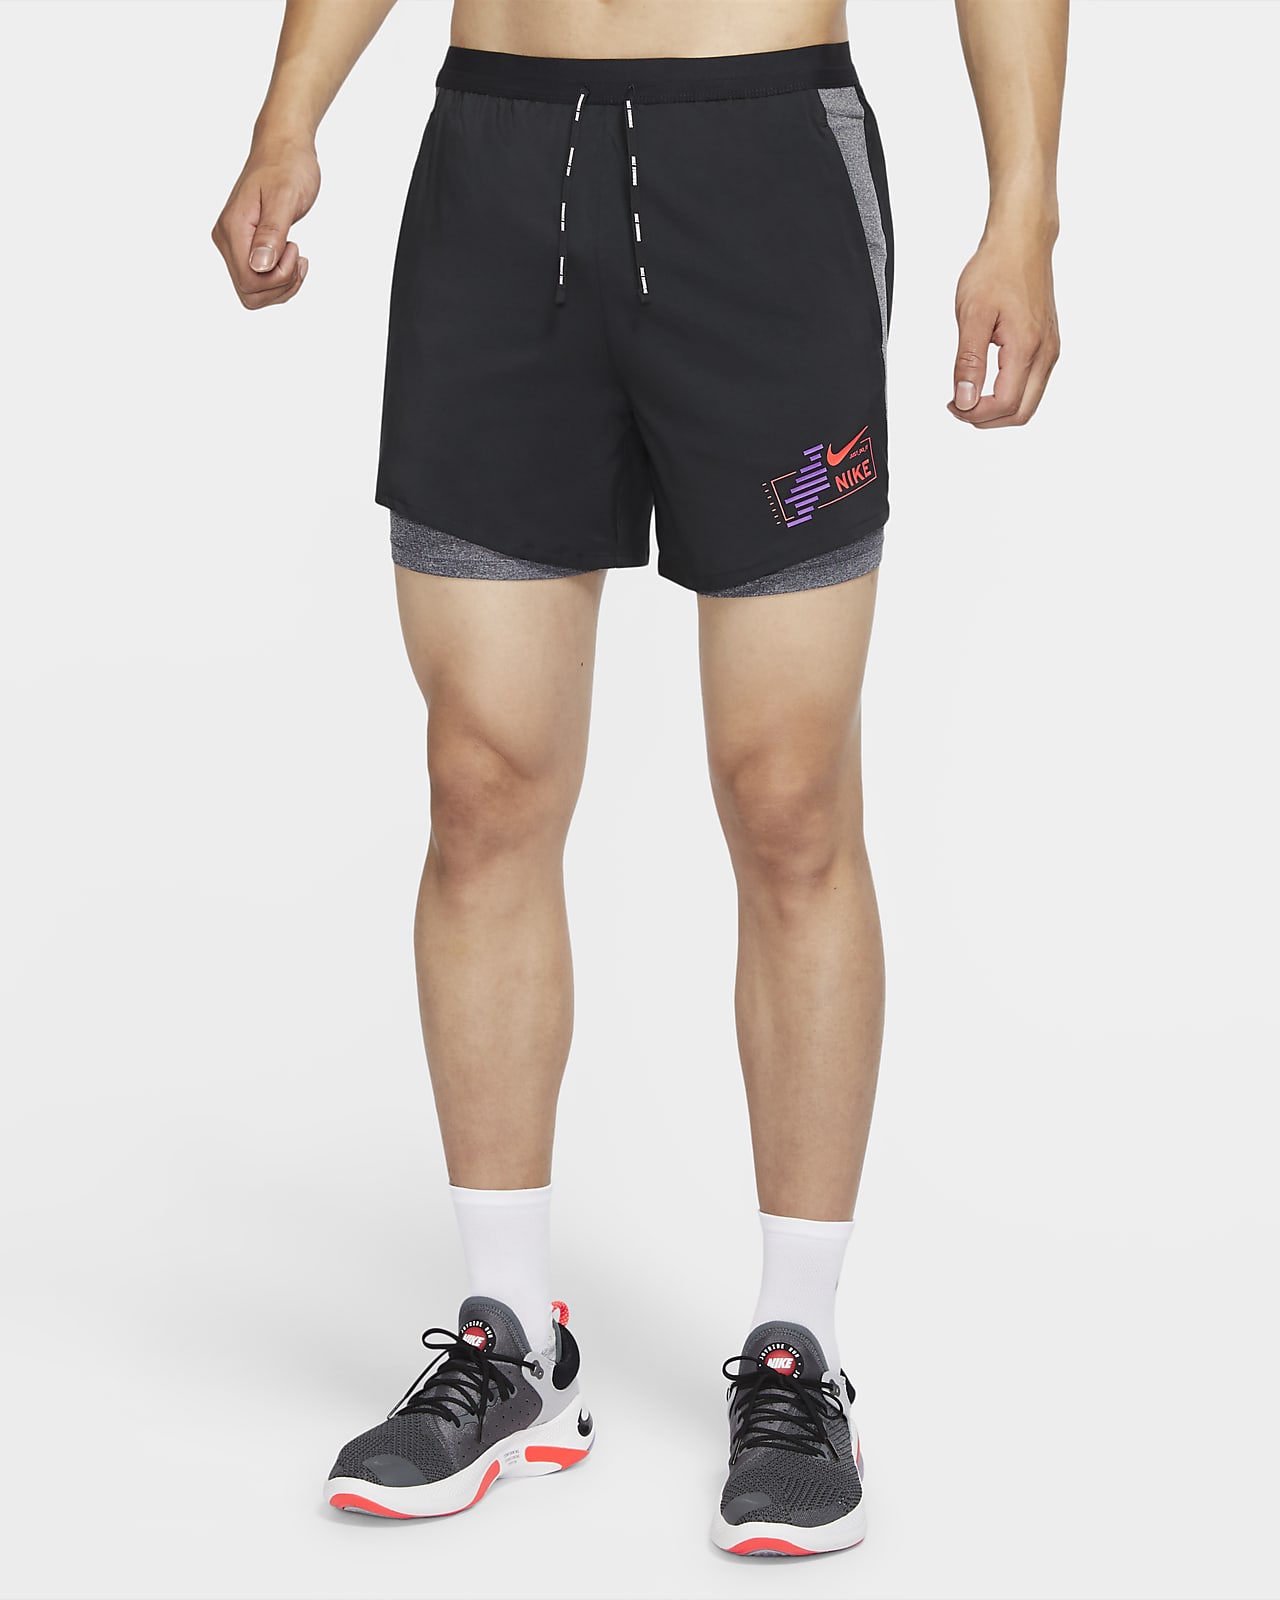 nike mens spandex running shorts